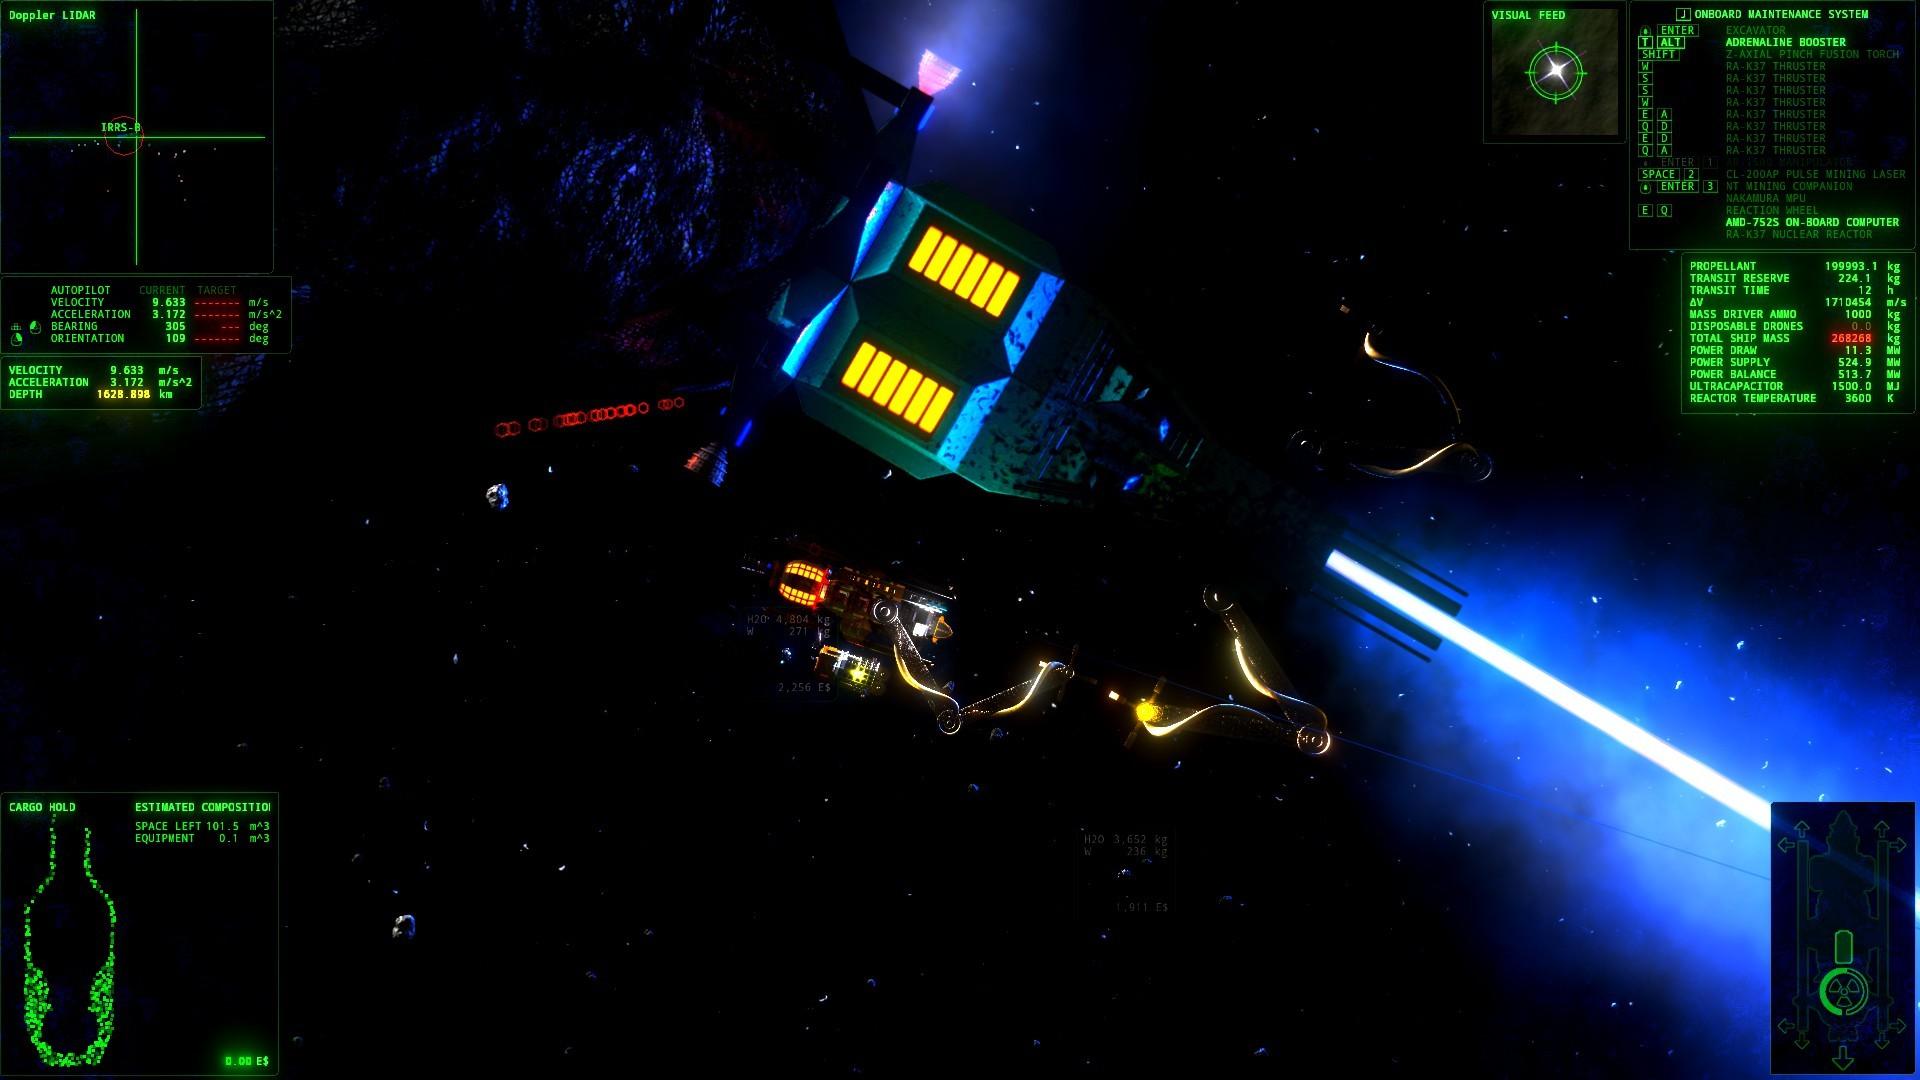 Screenshot №5 from game ΔV: Rings of Saturn